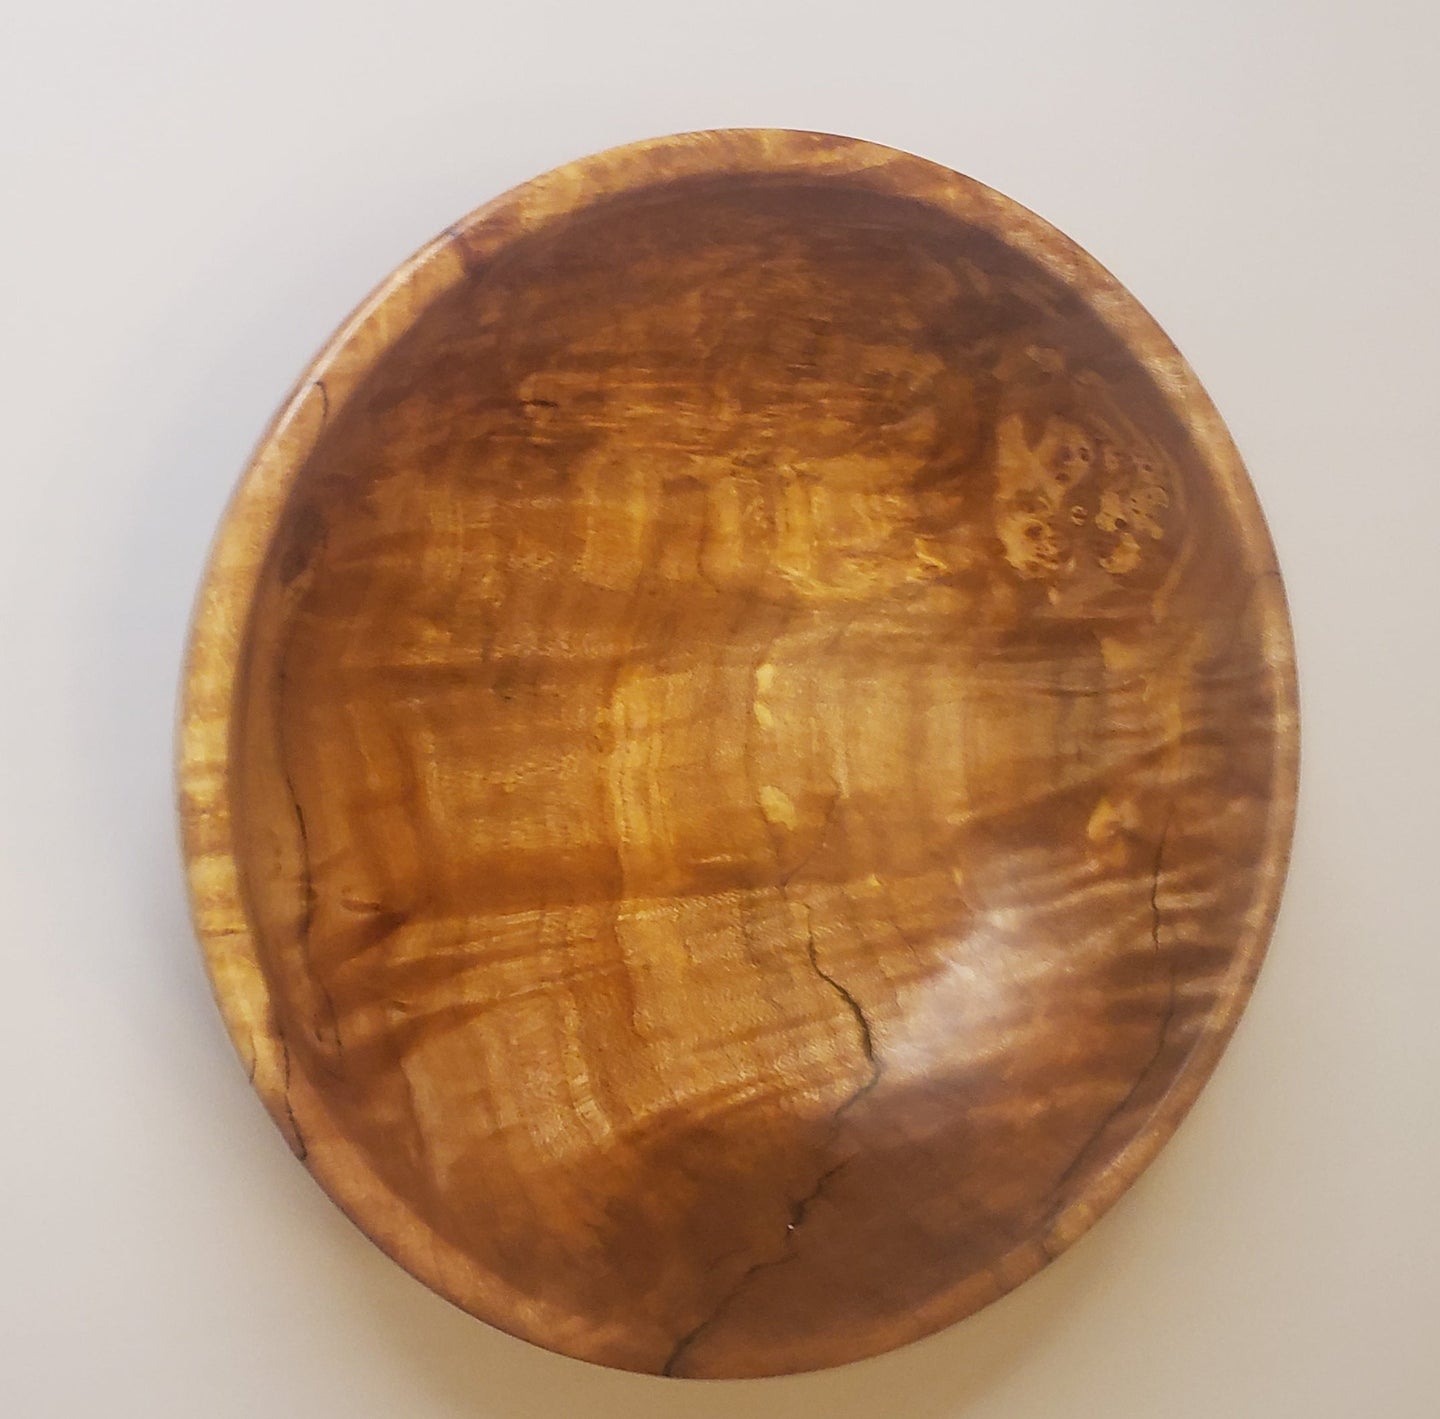 Maple bowl